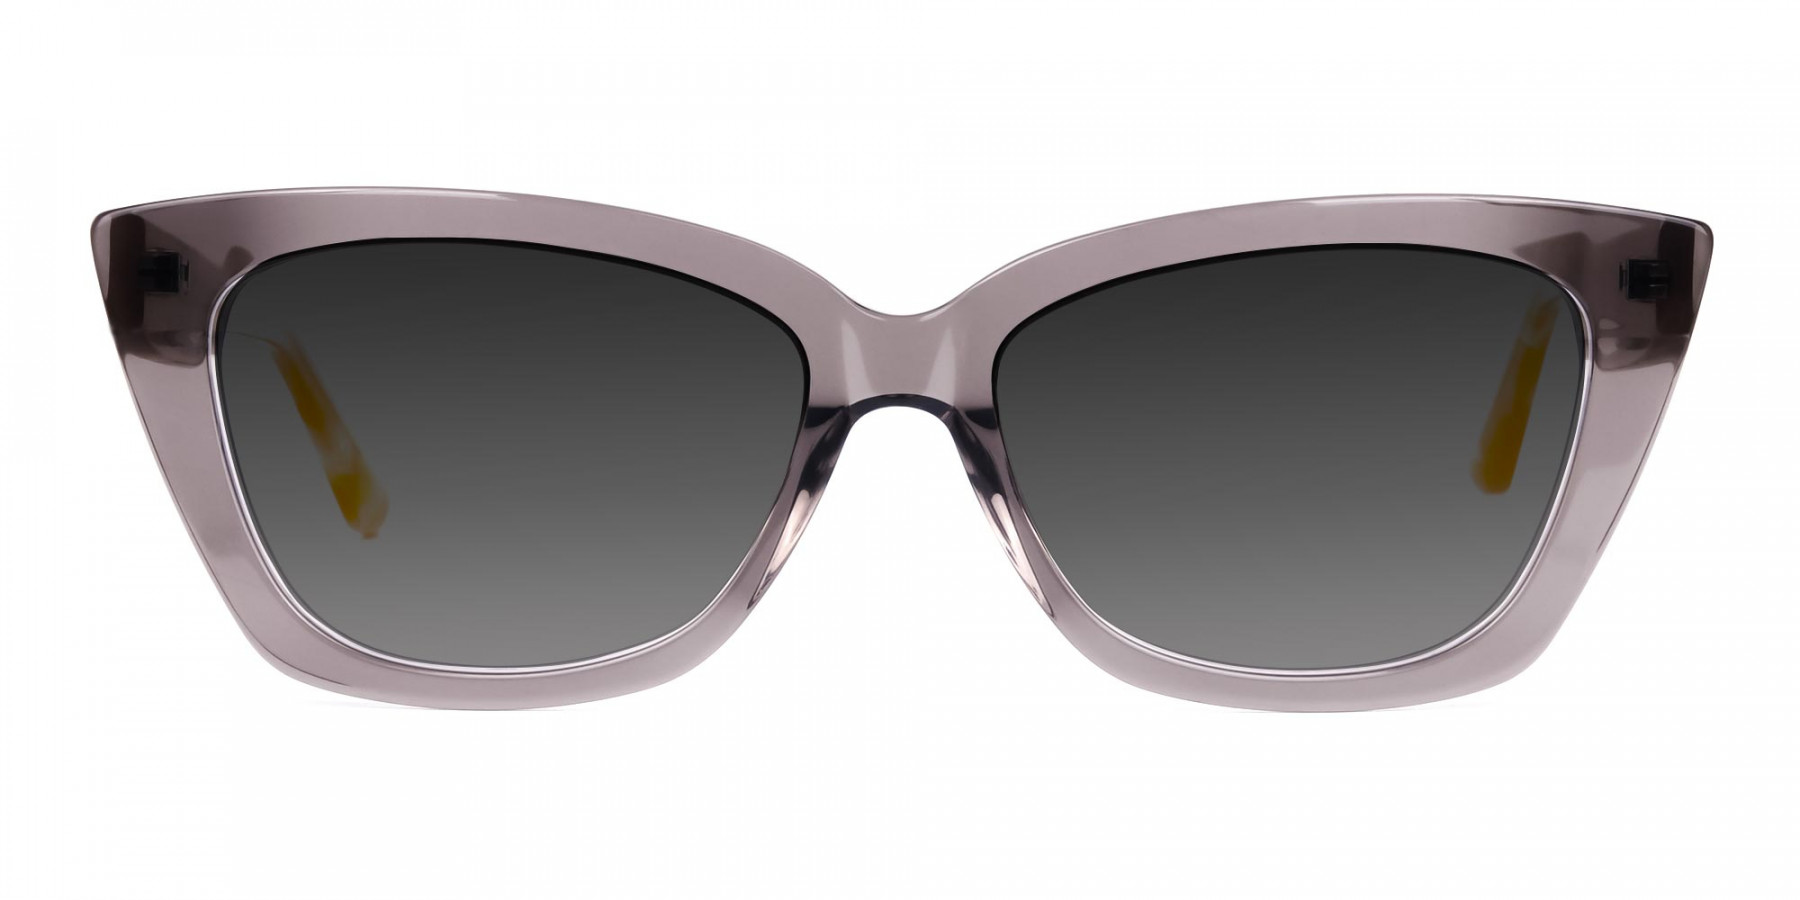 clear-Wayfarer-Sunglasses-with-Grey-Tint-1